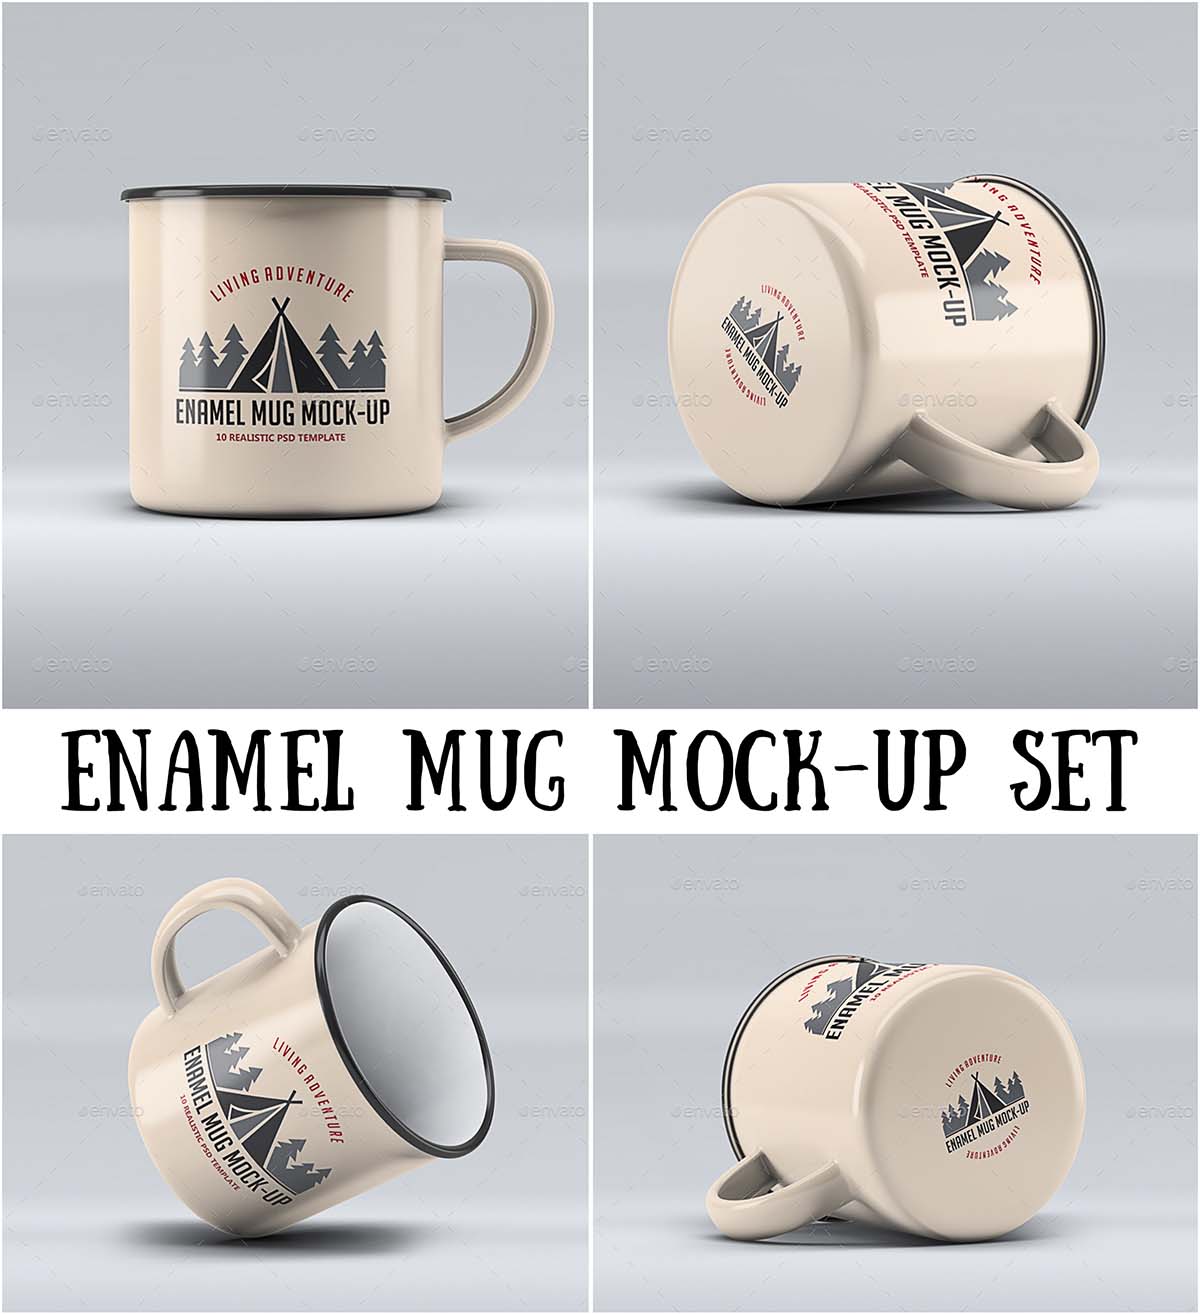 Enamel mug mockup collection